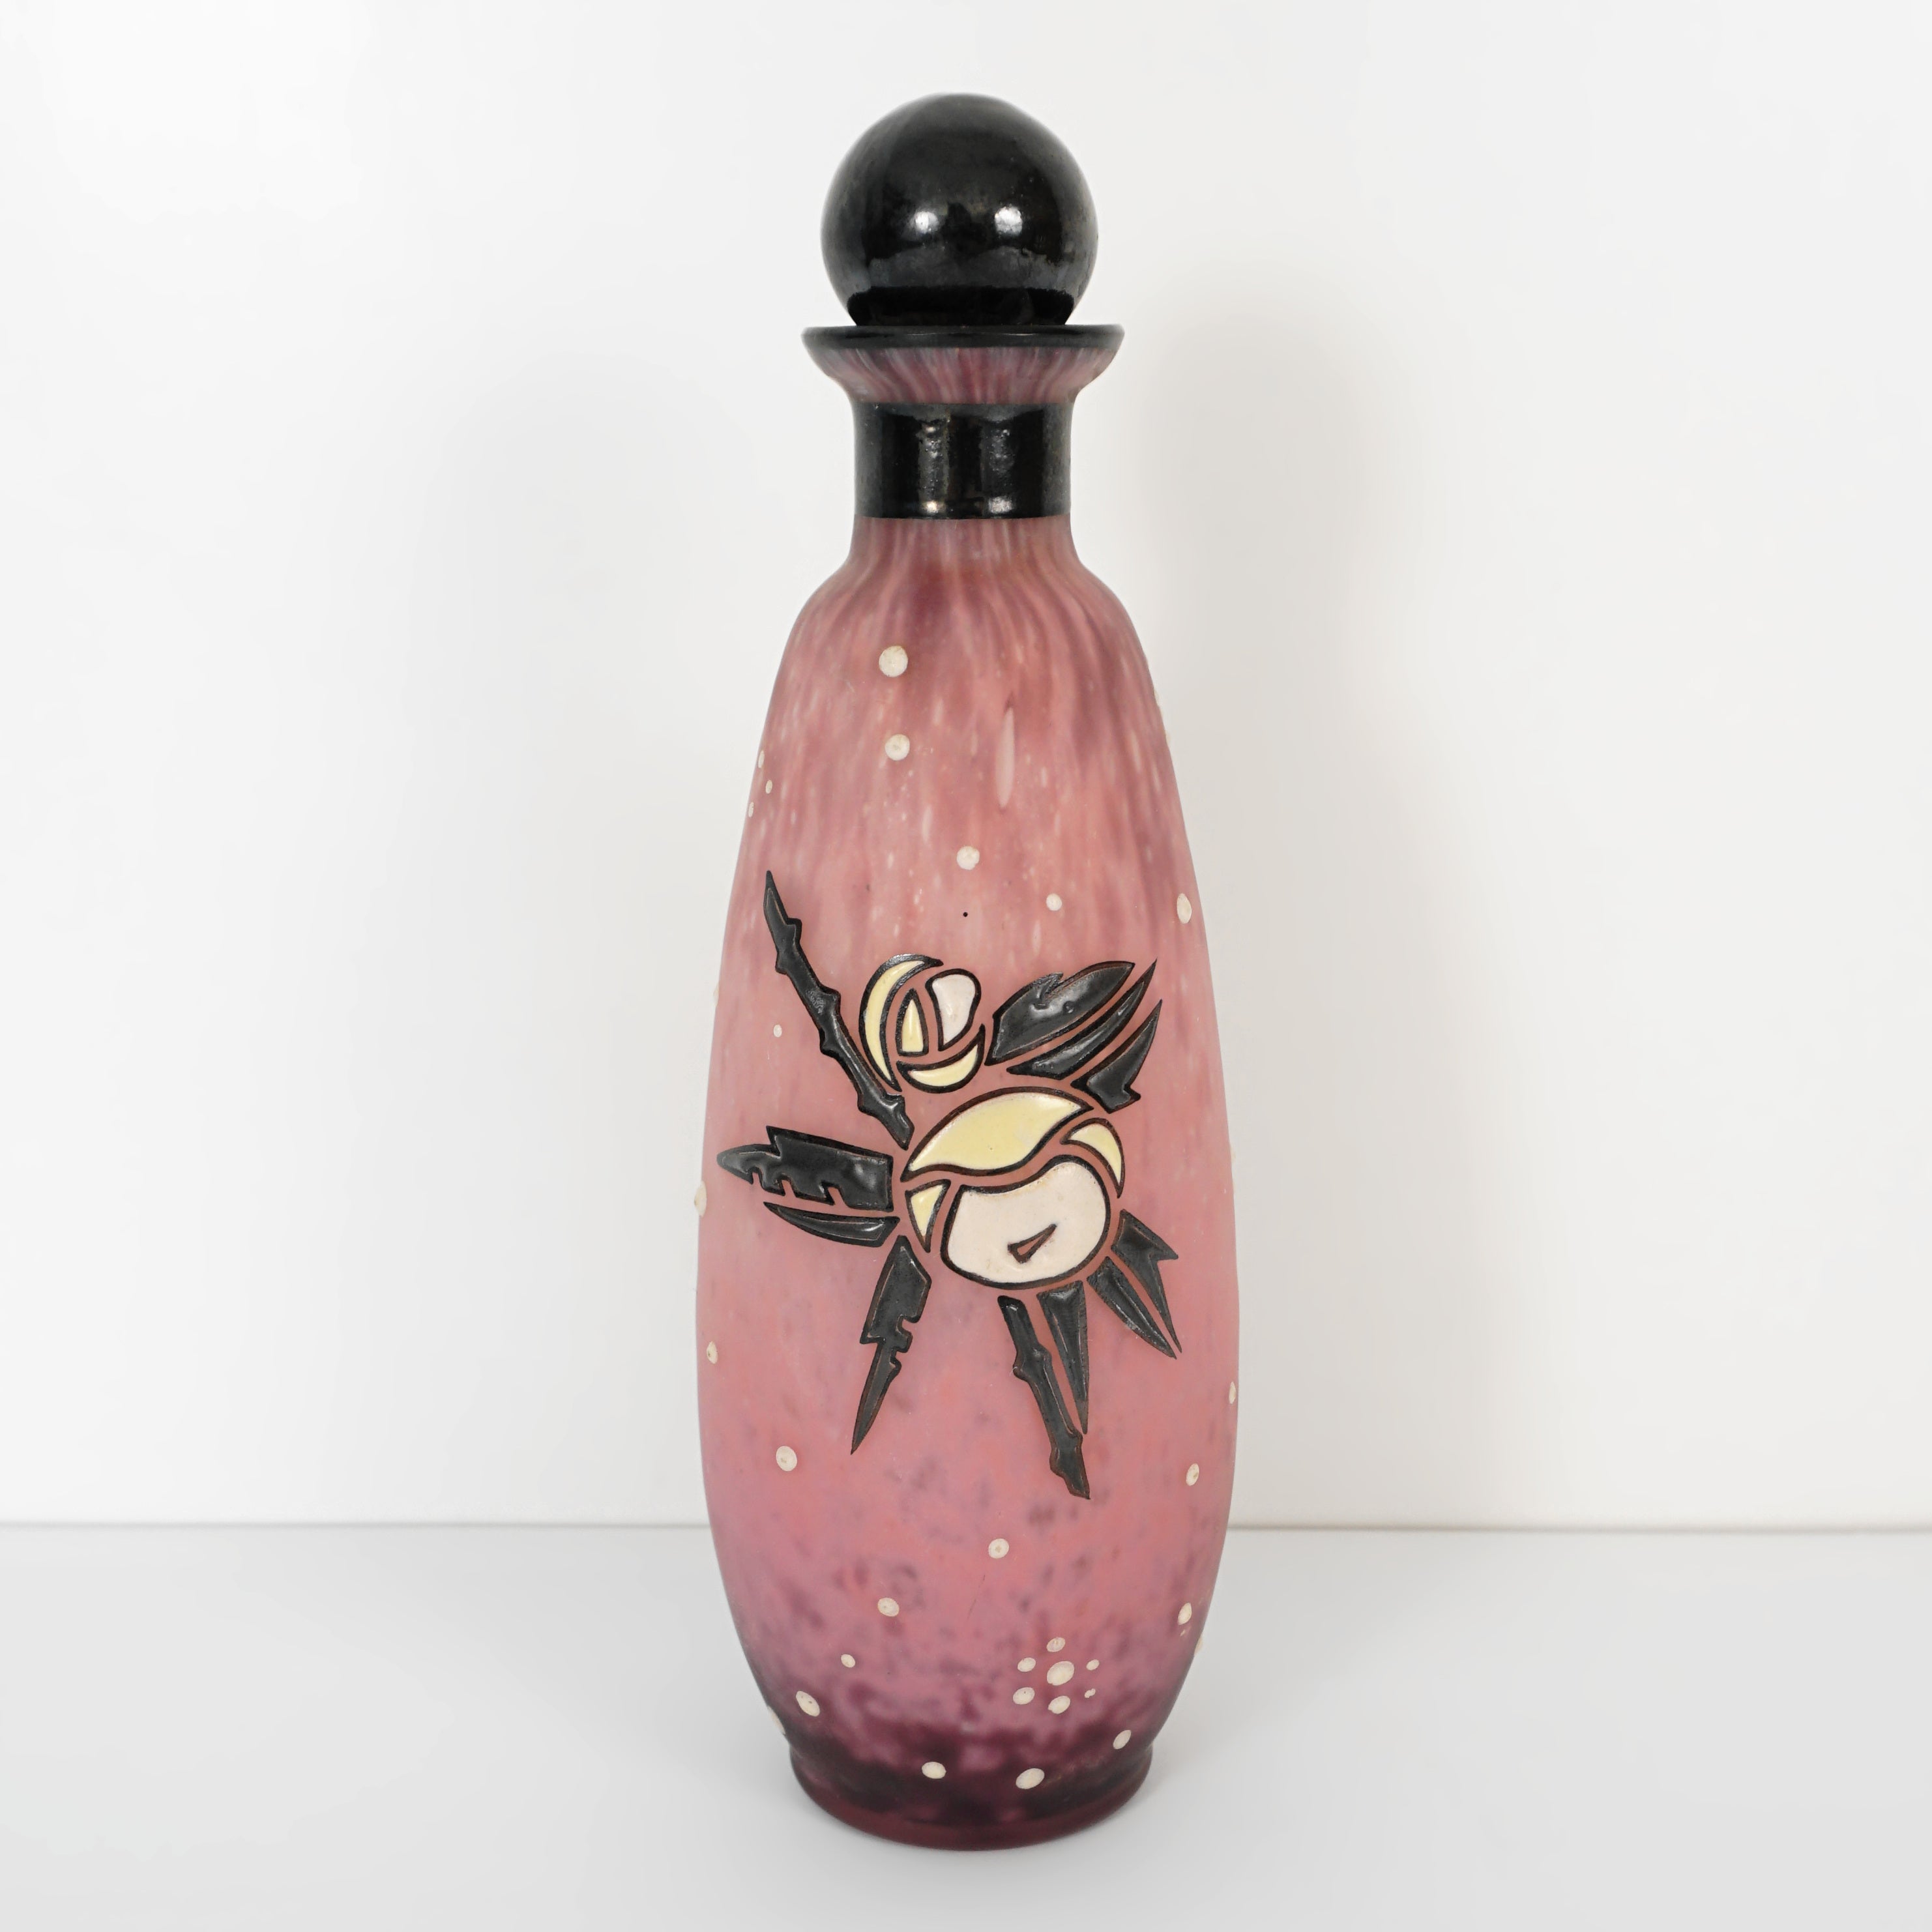 Pin by Darlane on Fragrances  Perfume, Eau de toilette, Perfume bottles